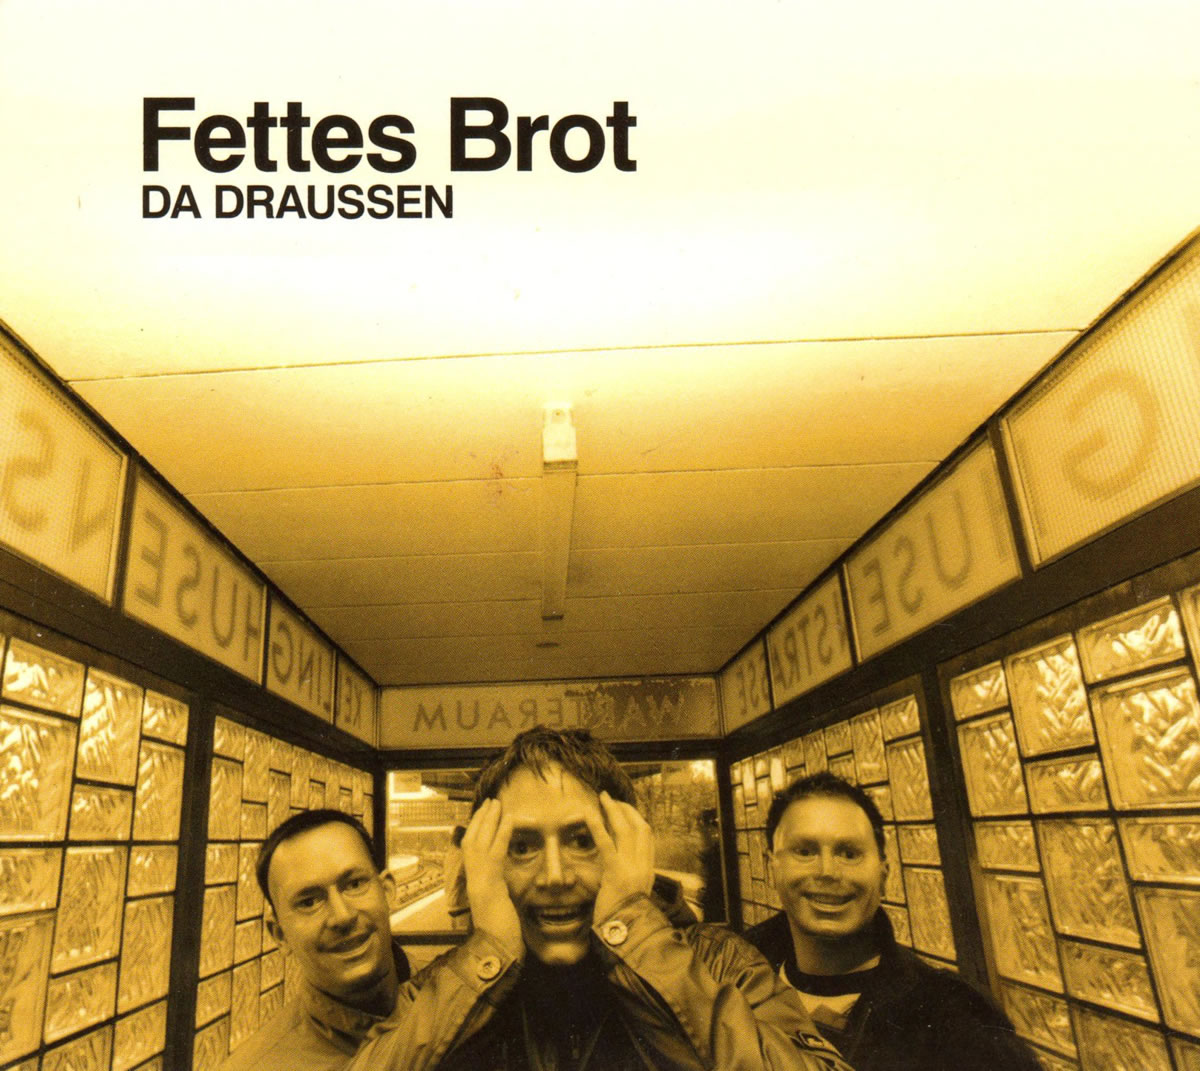 Fettes Brot — Da draußen cover artwork